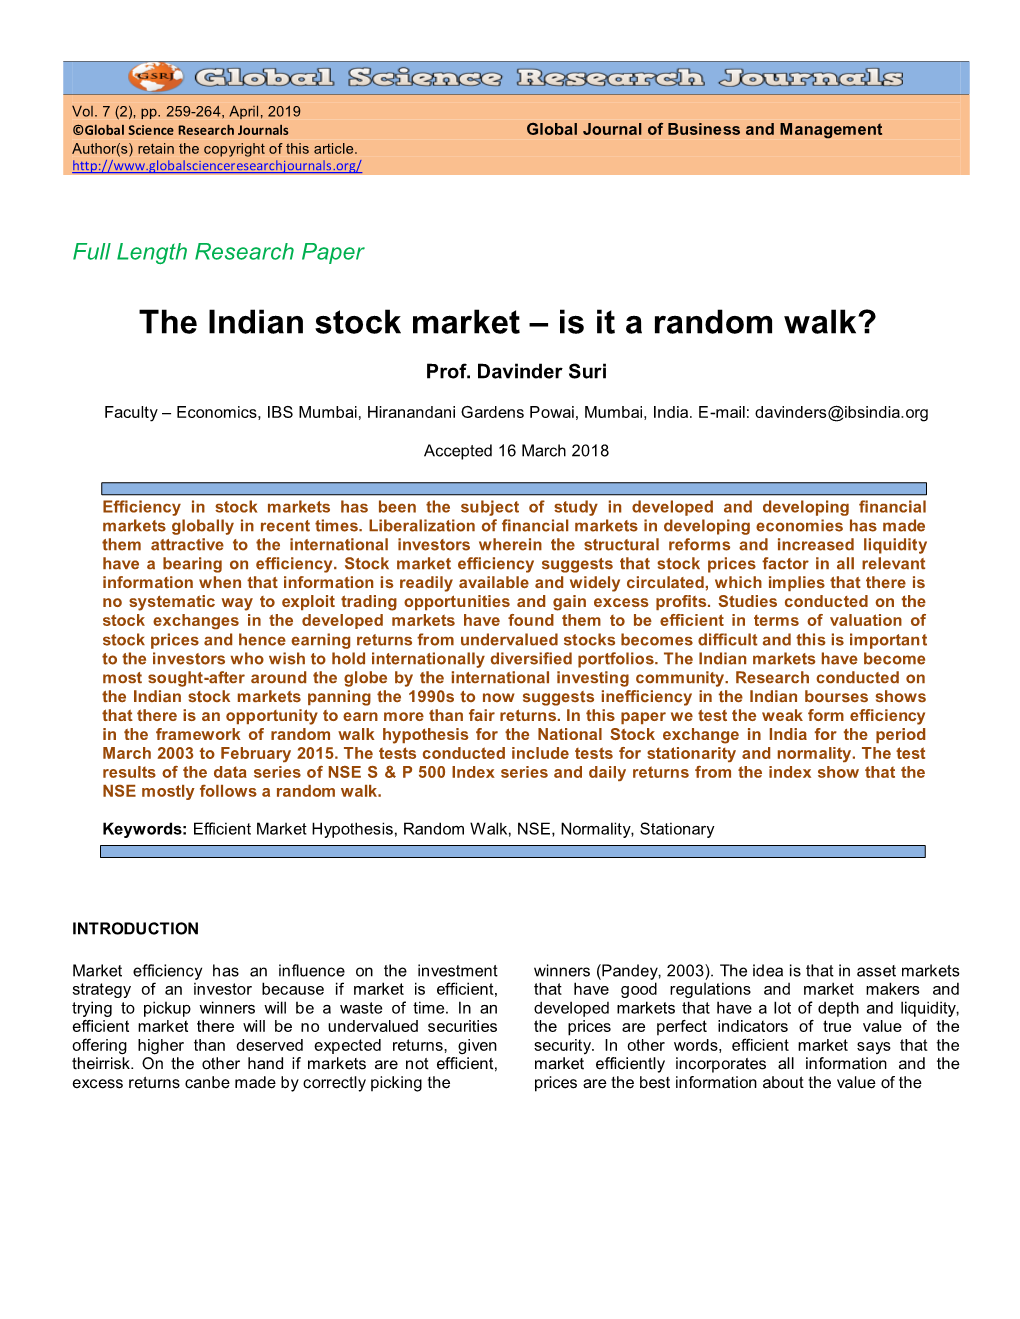 The Indian Stock Market – Is It a Random Walk?